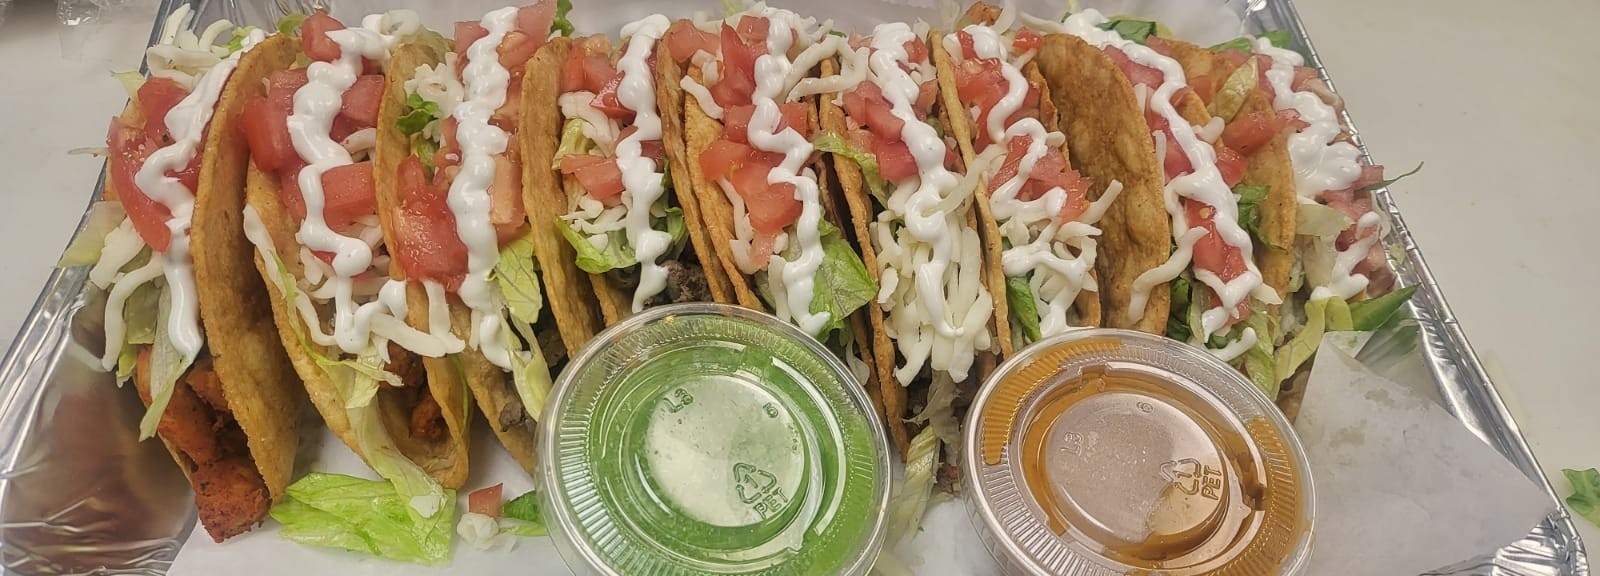 Order Hard Tacos